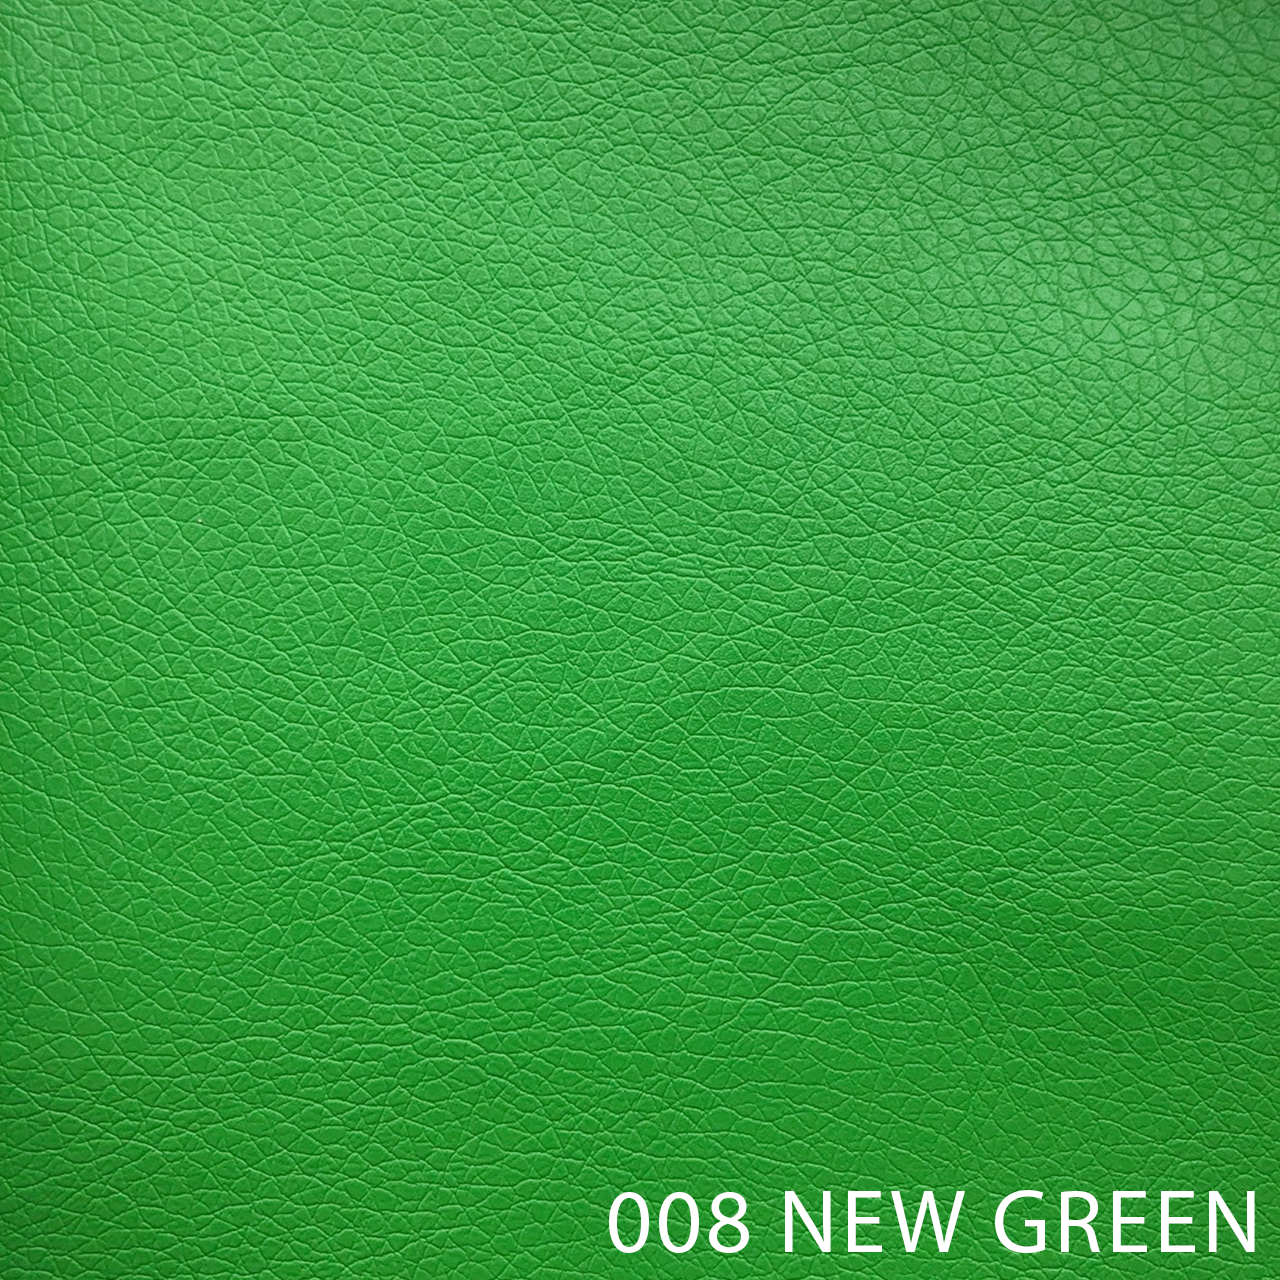 008 NEW GREEN